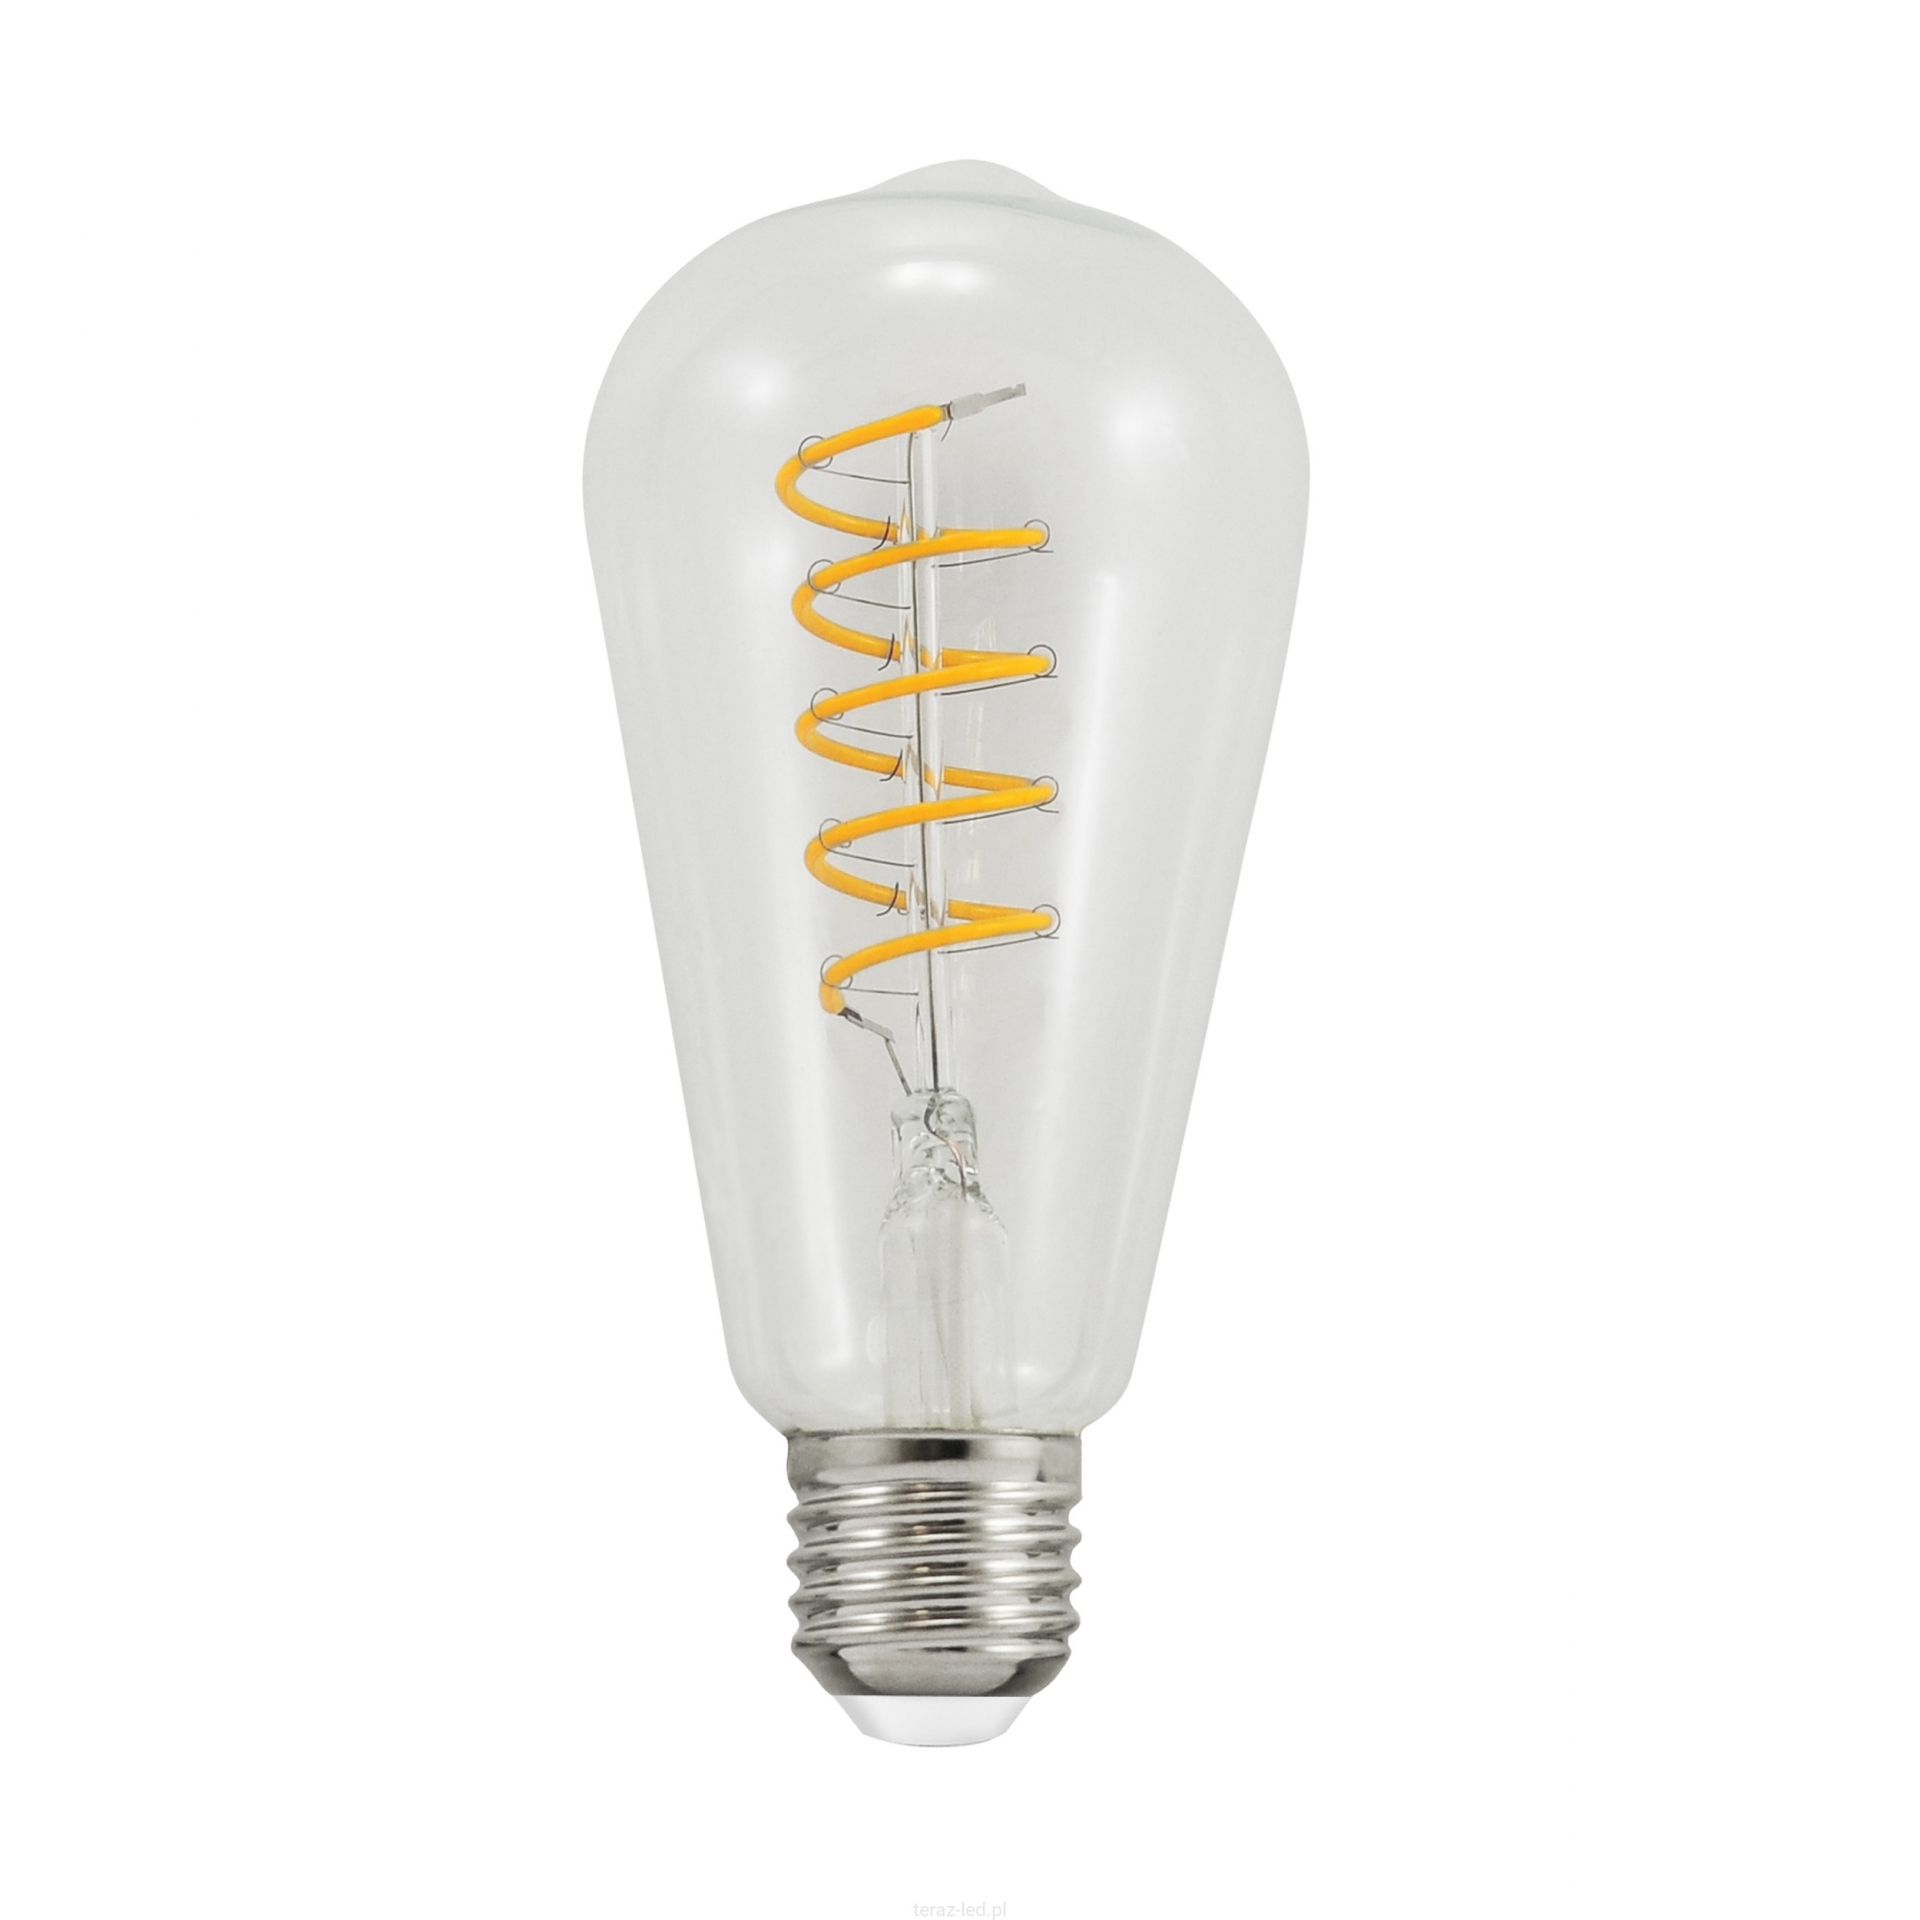 ik ben trots String string Krijt Filament LED-lamp E27 4 Watt 210 lumen 2200 kelvin - Spiraal - ABC-led.nl